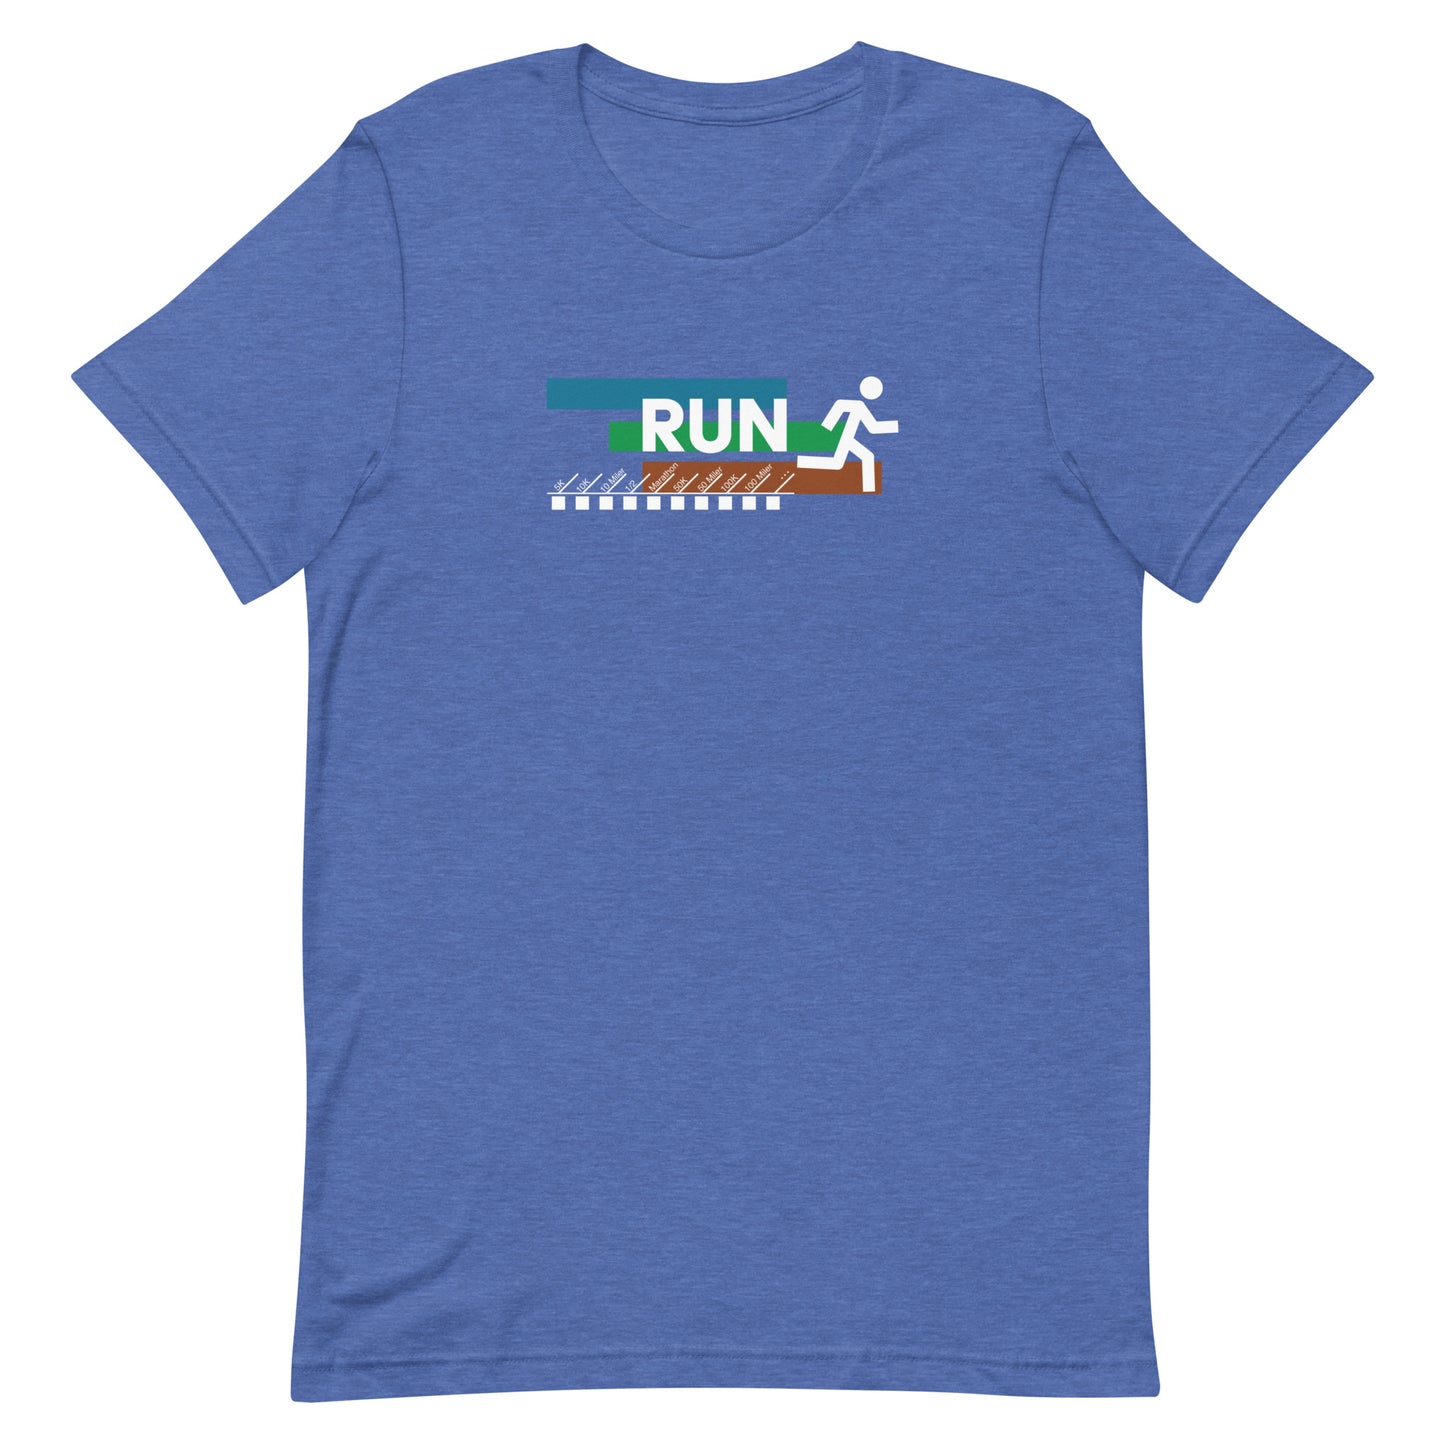 Runner Checklist Unisex t-shirt